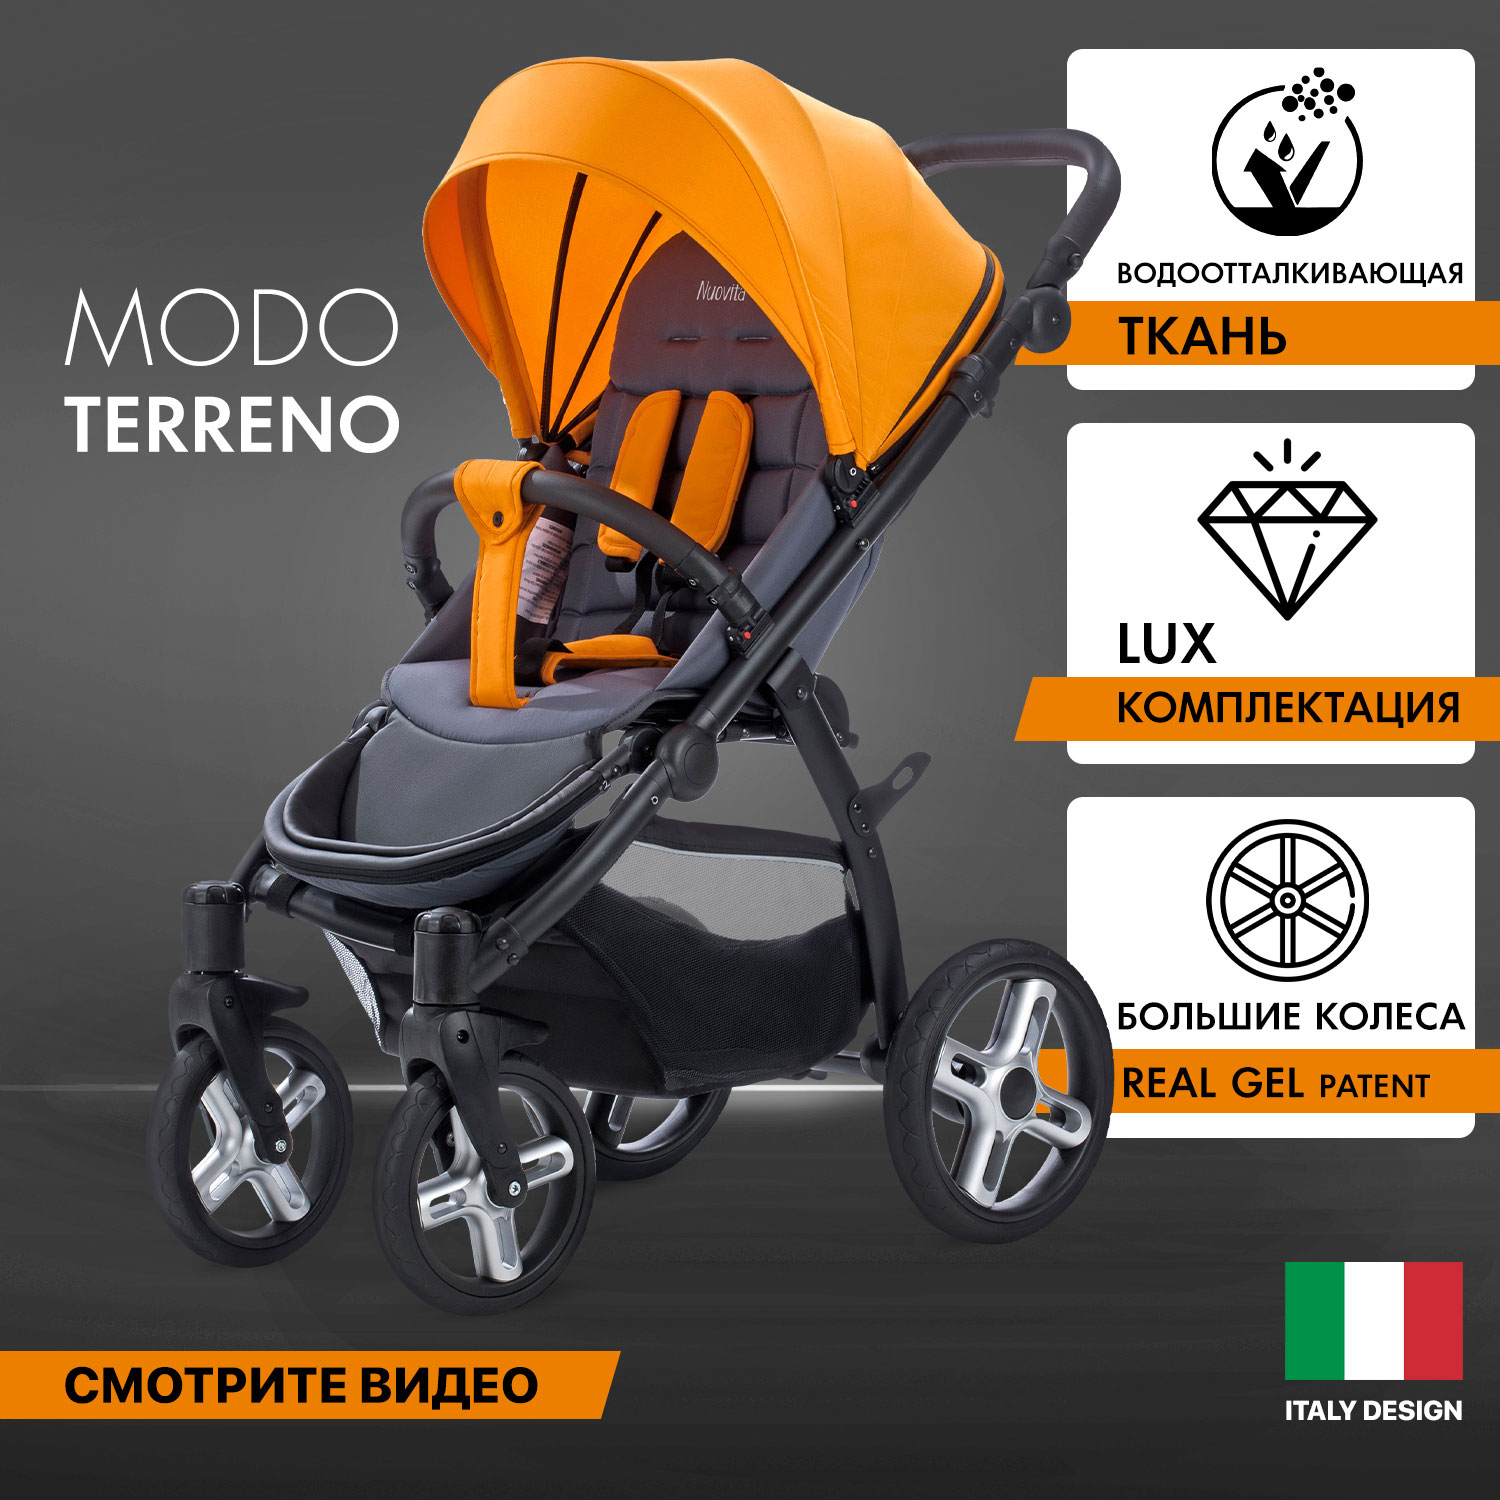 Прогулочная коляска Nuovita Modo Terreno оранжево - серый прогулочная коляска nuovita modo terreno бирюзово серый